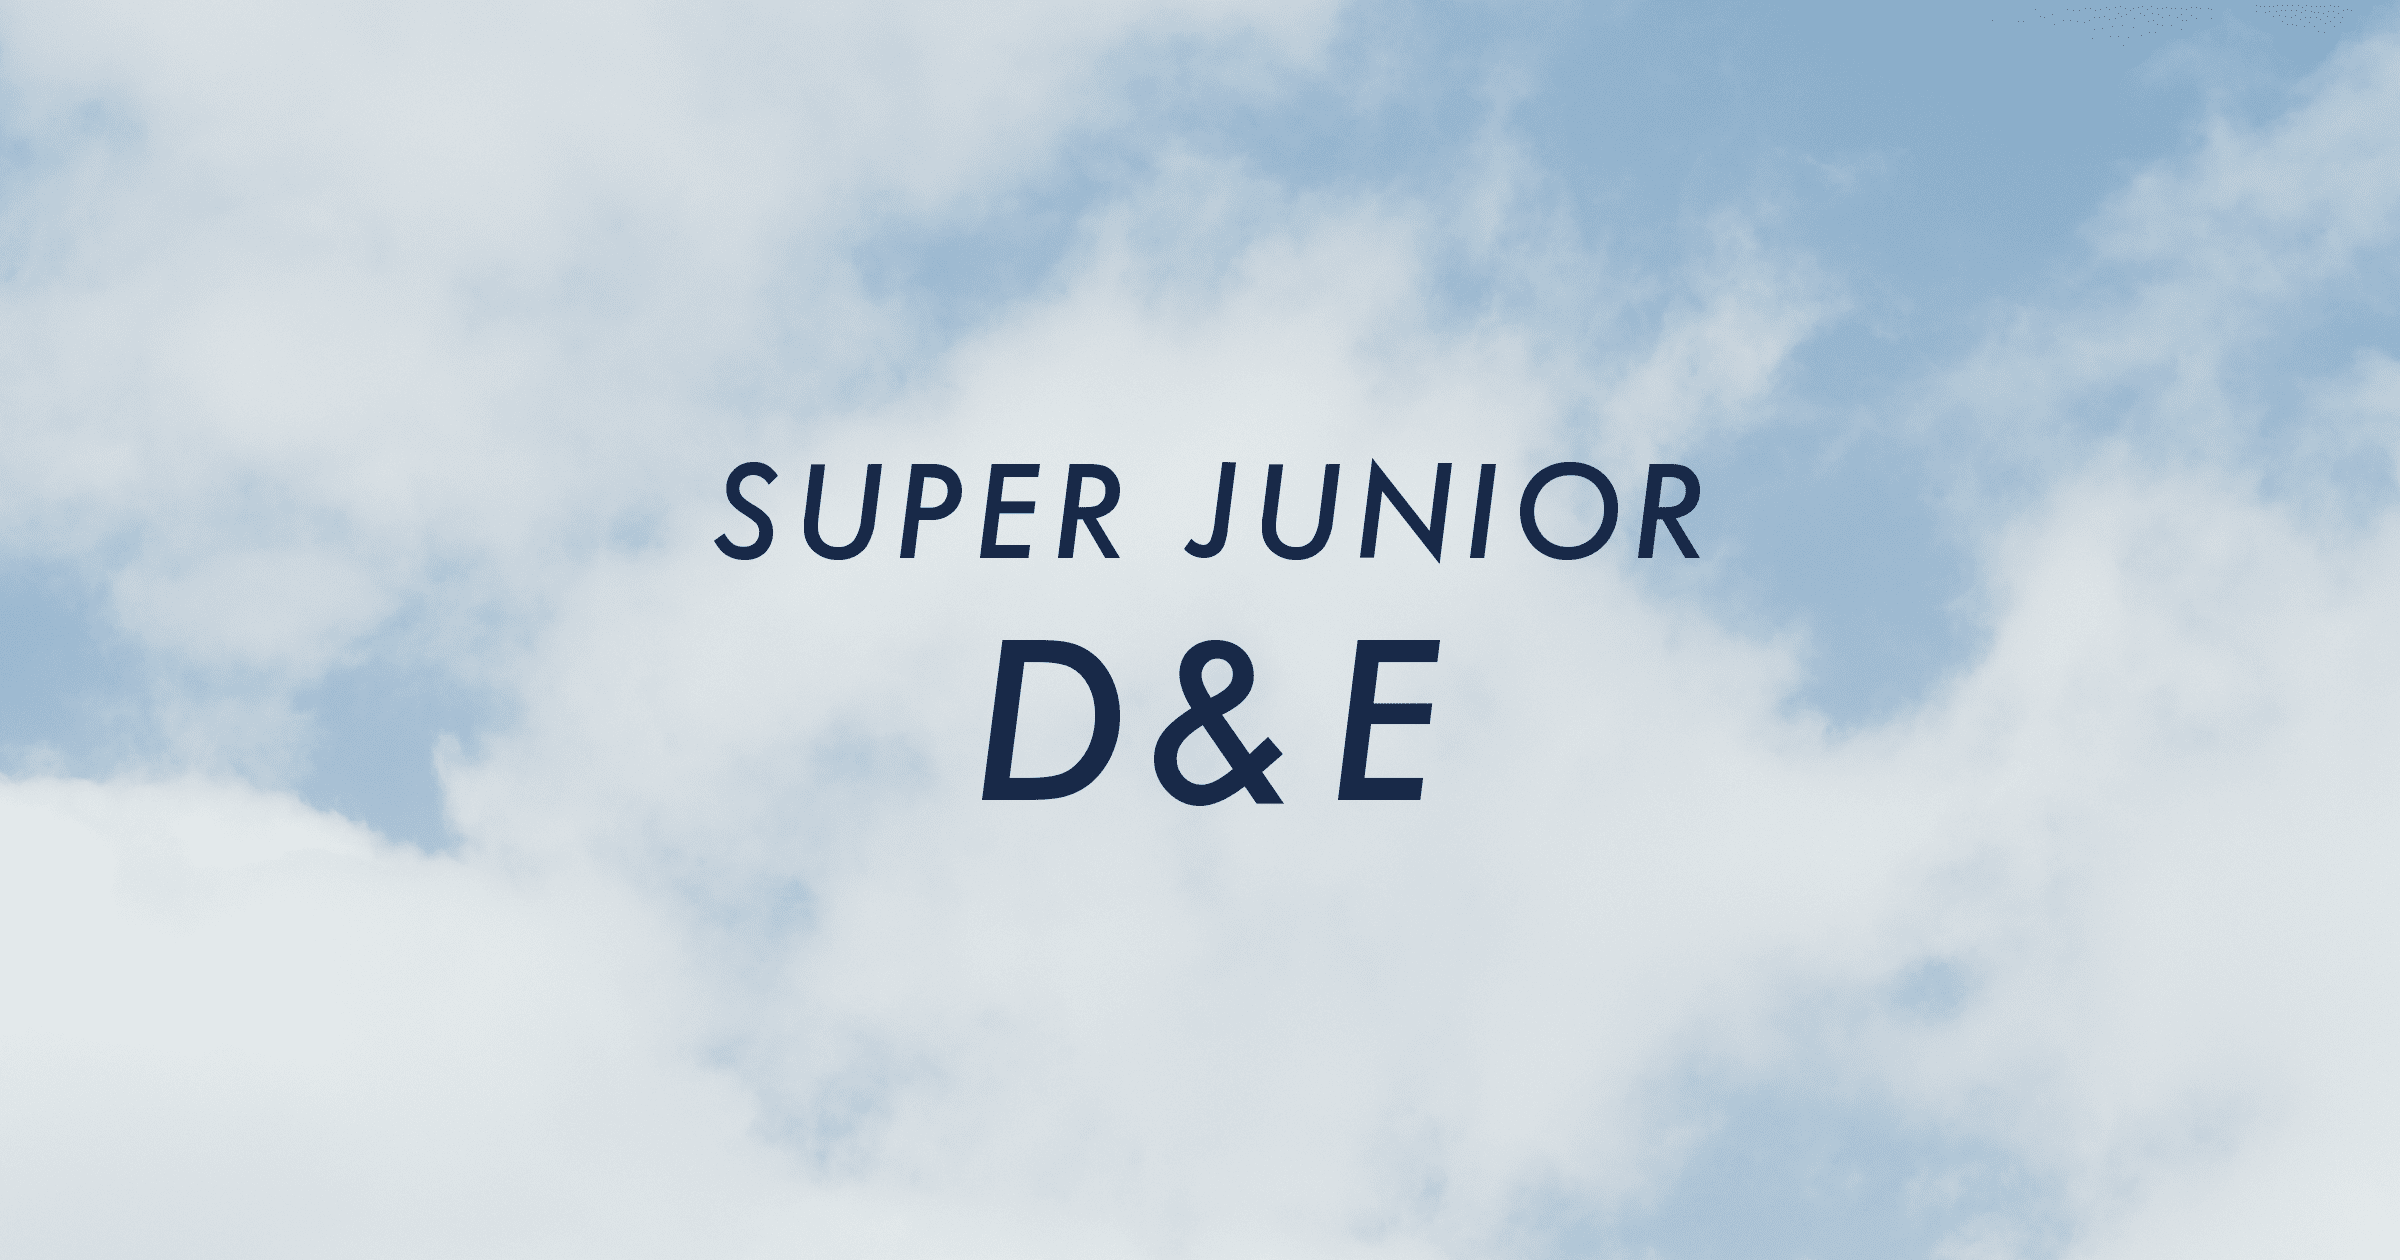 SUPER JUNIOR-D&E Single「Wings」2020年11月25日リリース